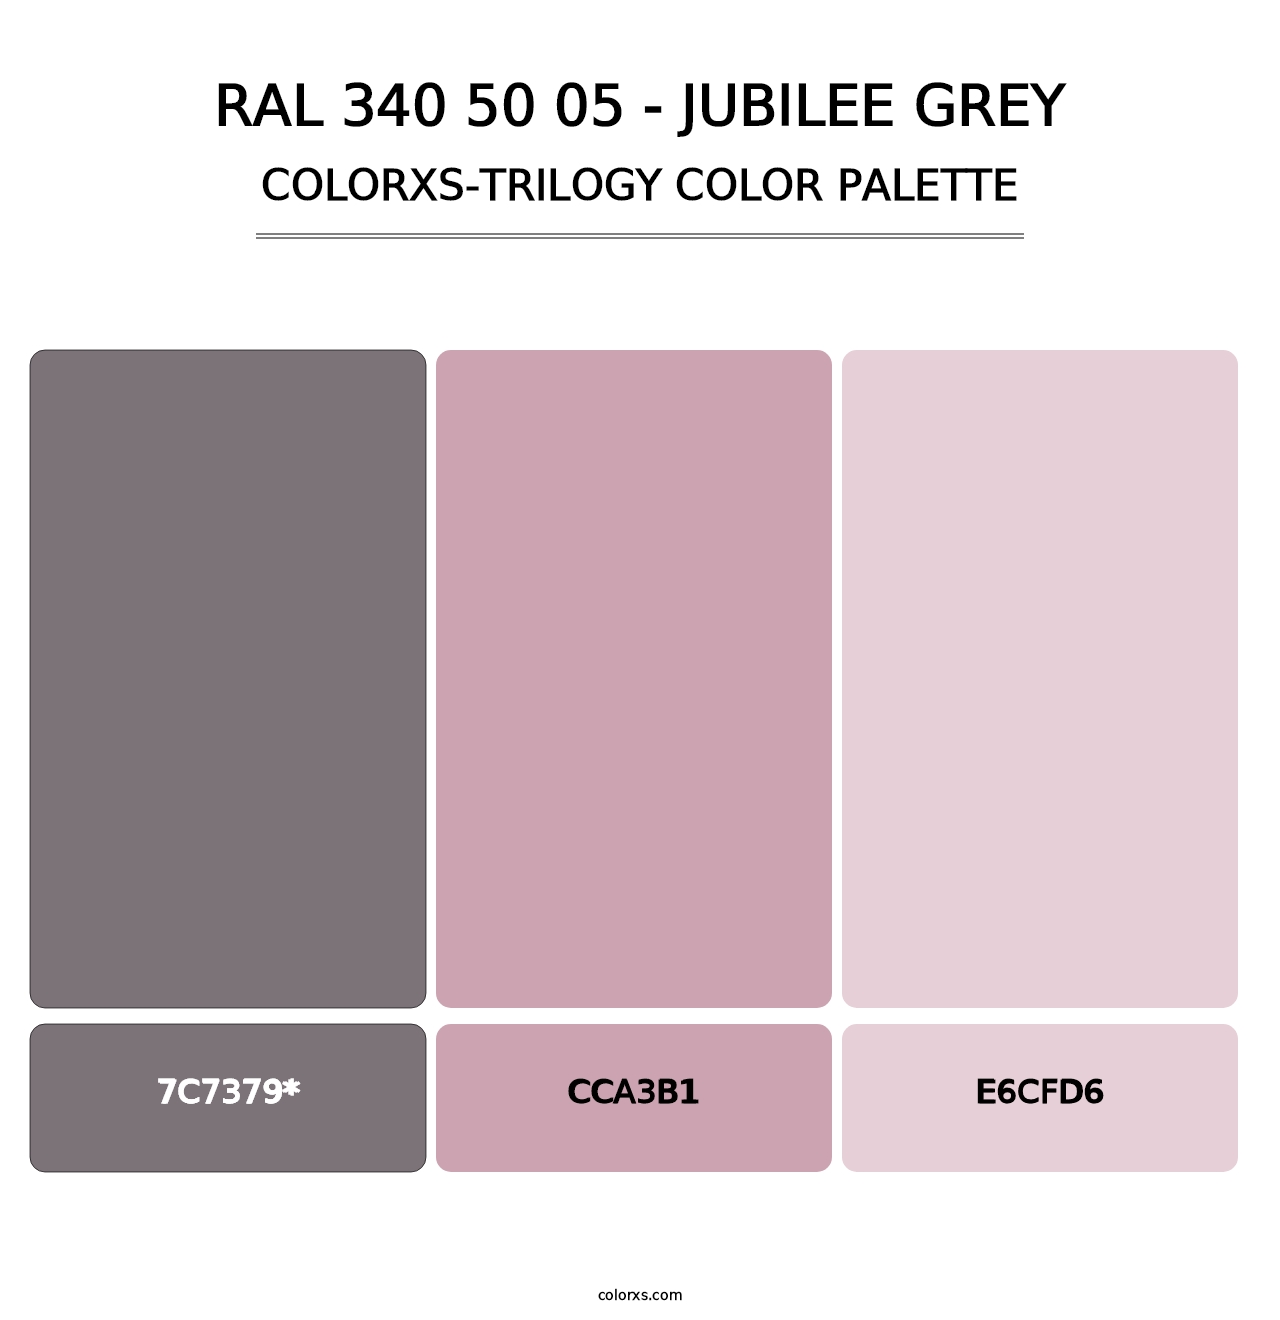 RAL 340 50 05 - Jubilee Grey - Colorxs Trilogy Palette